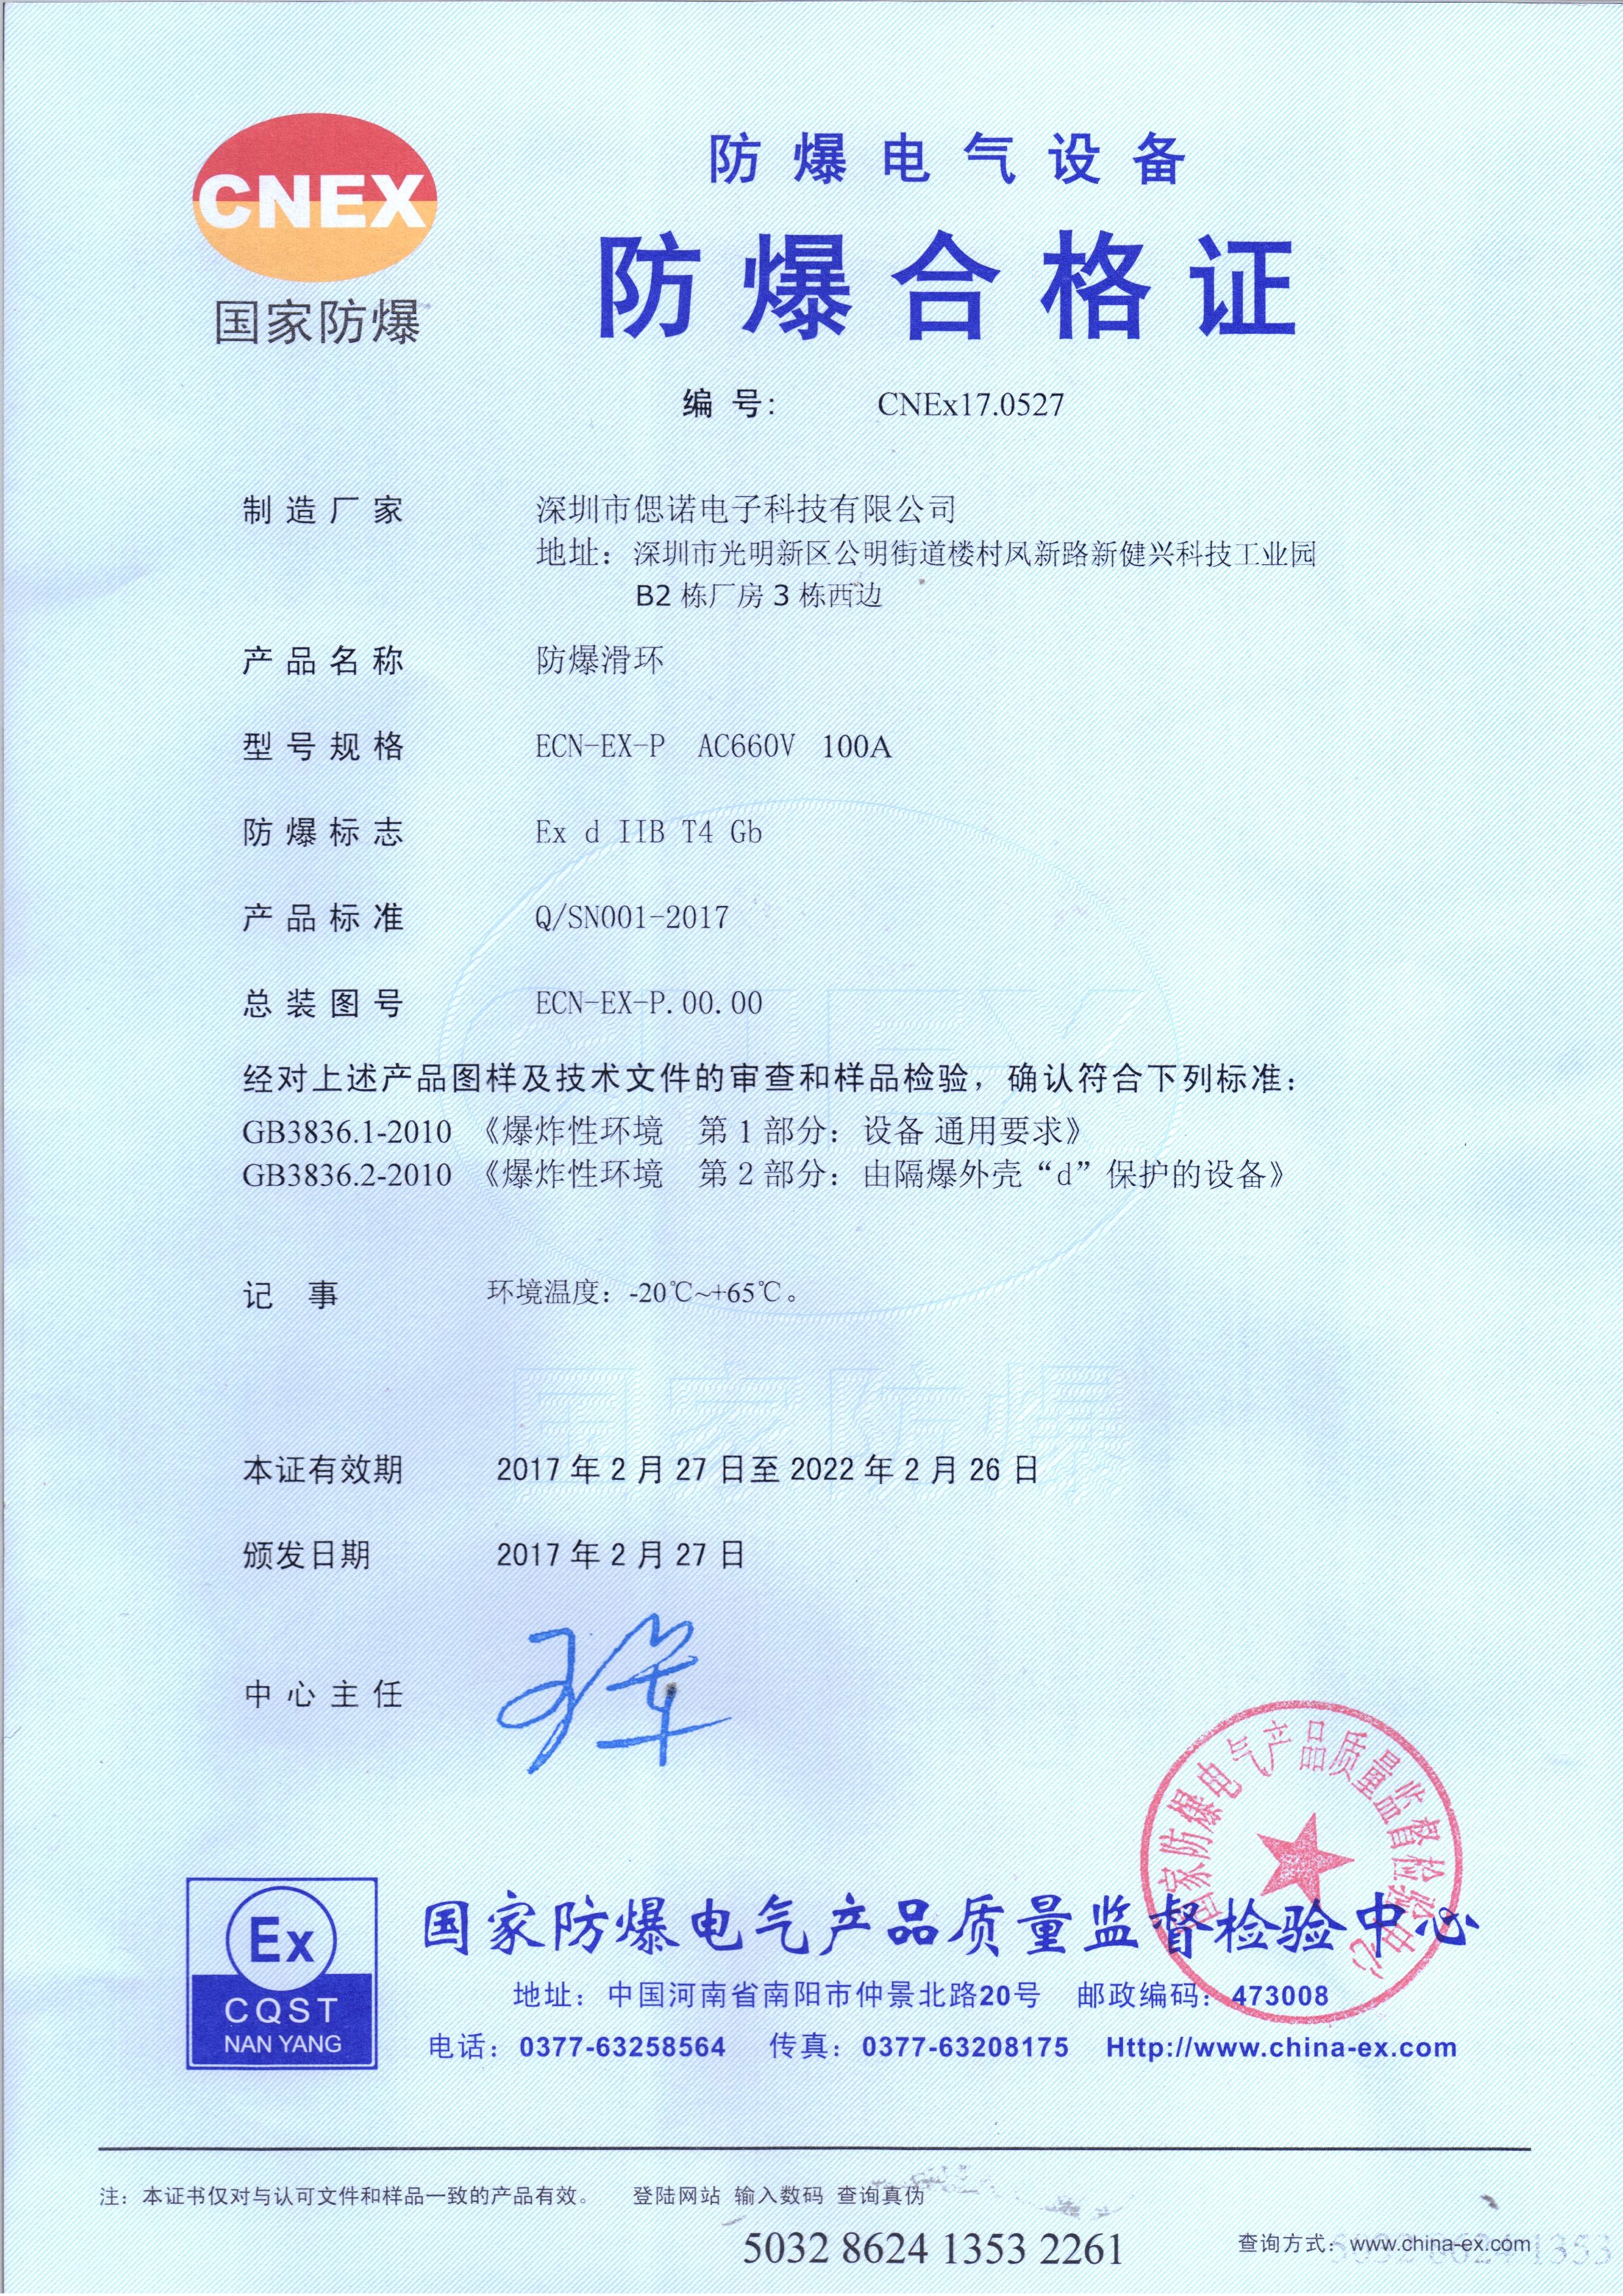 La CINA CENO Electronics Technology Co.,Ltd Certificazioni